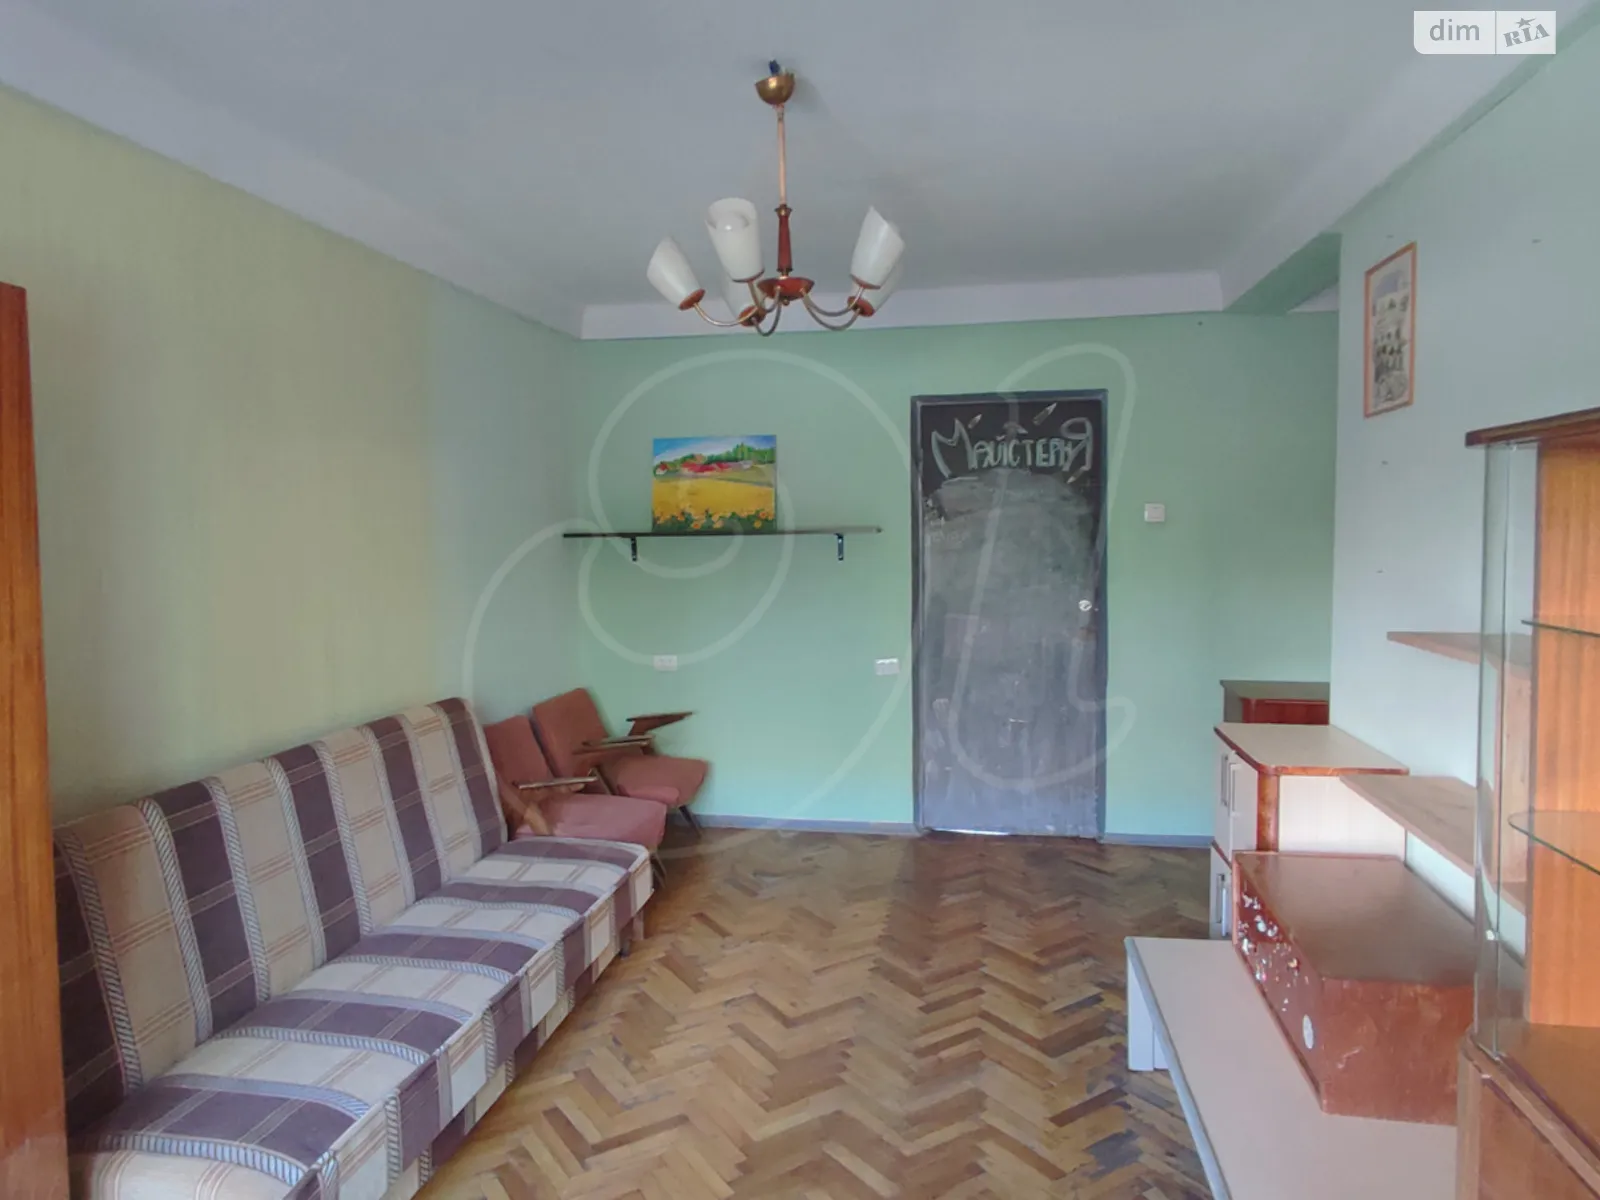 Сдается в аренду 3-комнатная квартира 60 кв. м в Киеве, ул. Александра Архипенко, 10В - фото 1